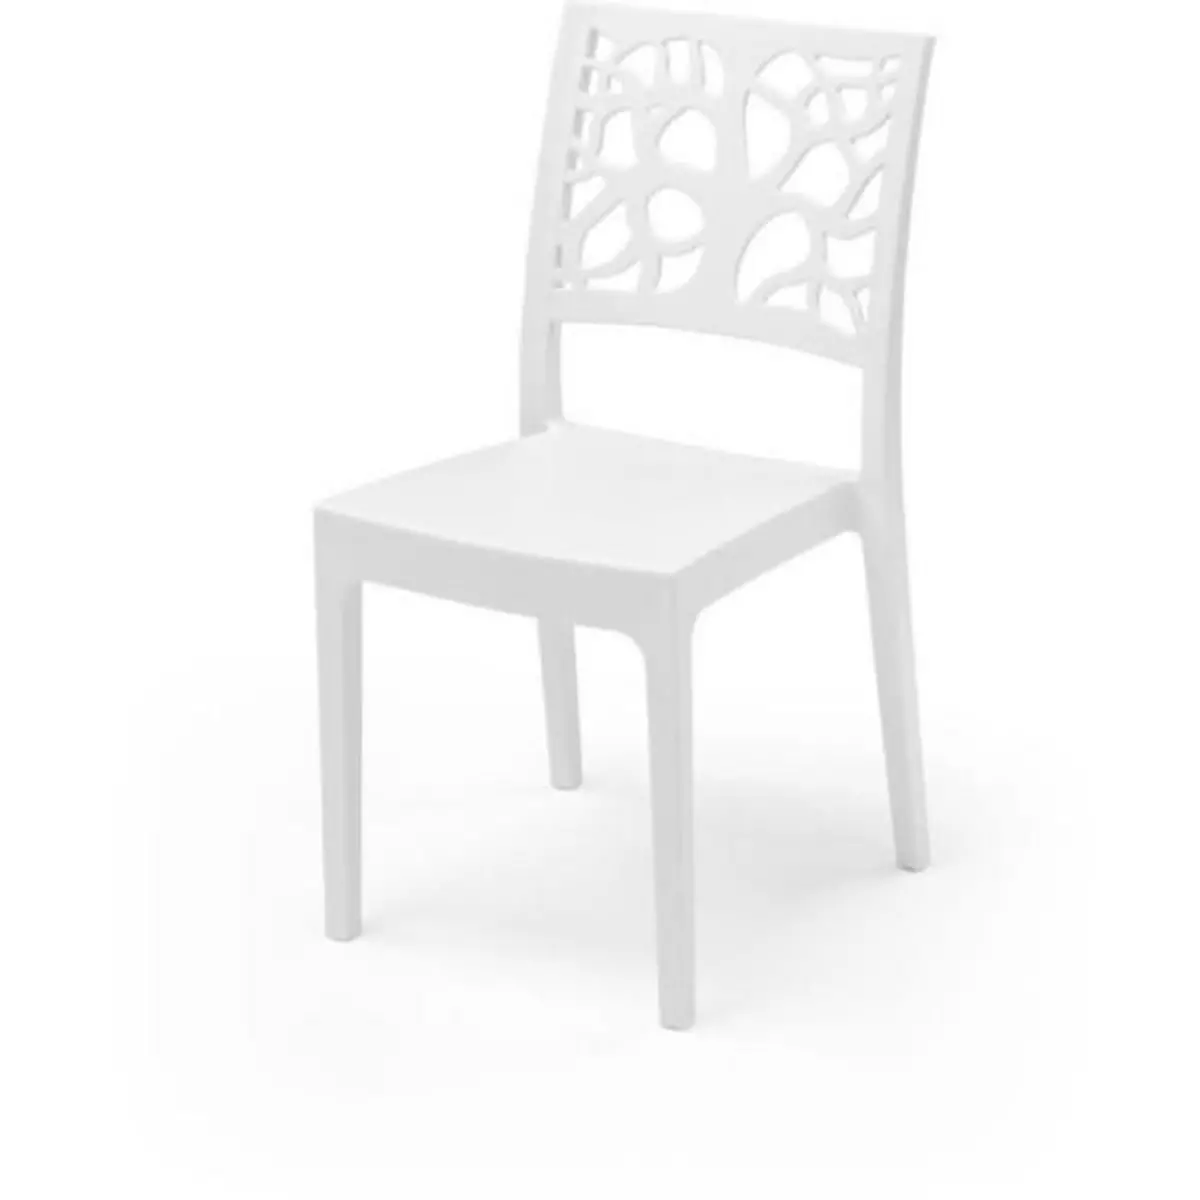 MARKET24 Lot de 4 chaises de jardin TETI ARETA - 52 x 46 x H 86 cm - Blanc